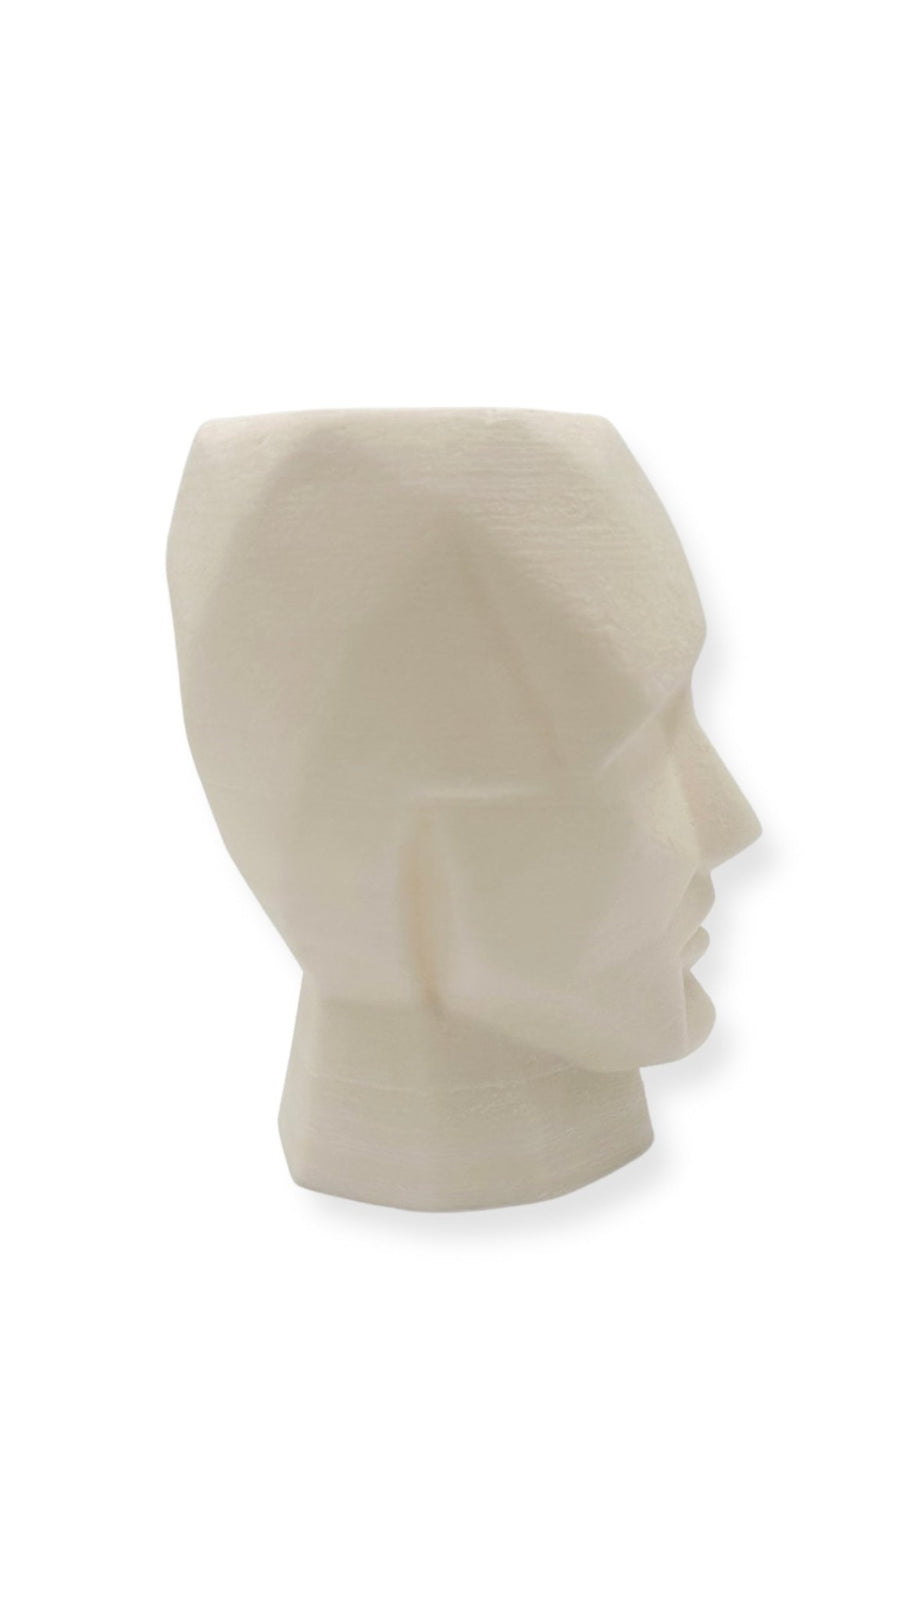 Escultura hueca diseño Geométrico de Cráneo - Elite Candles